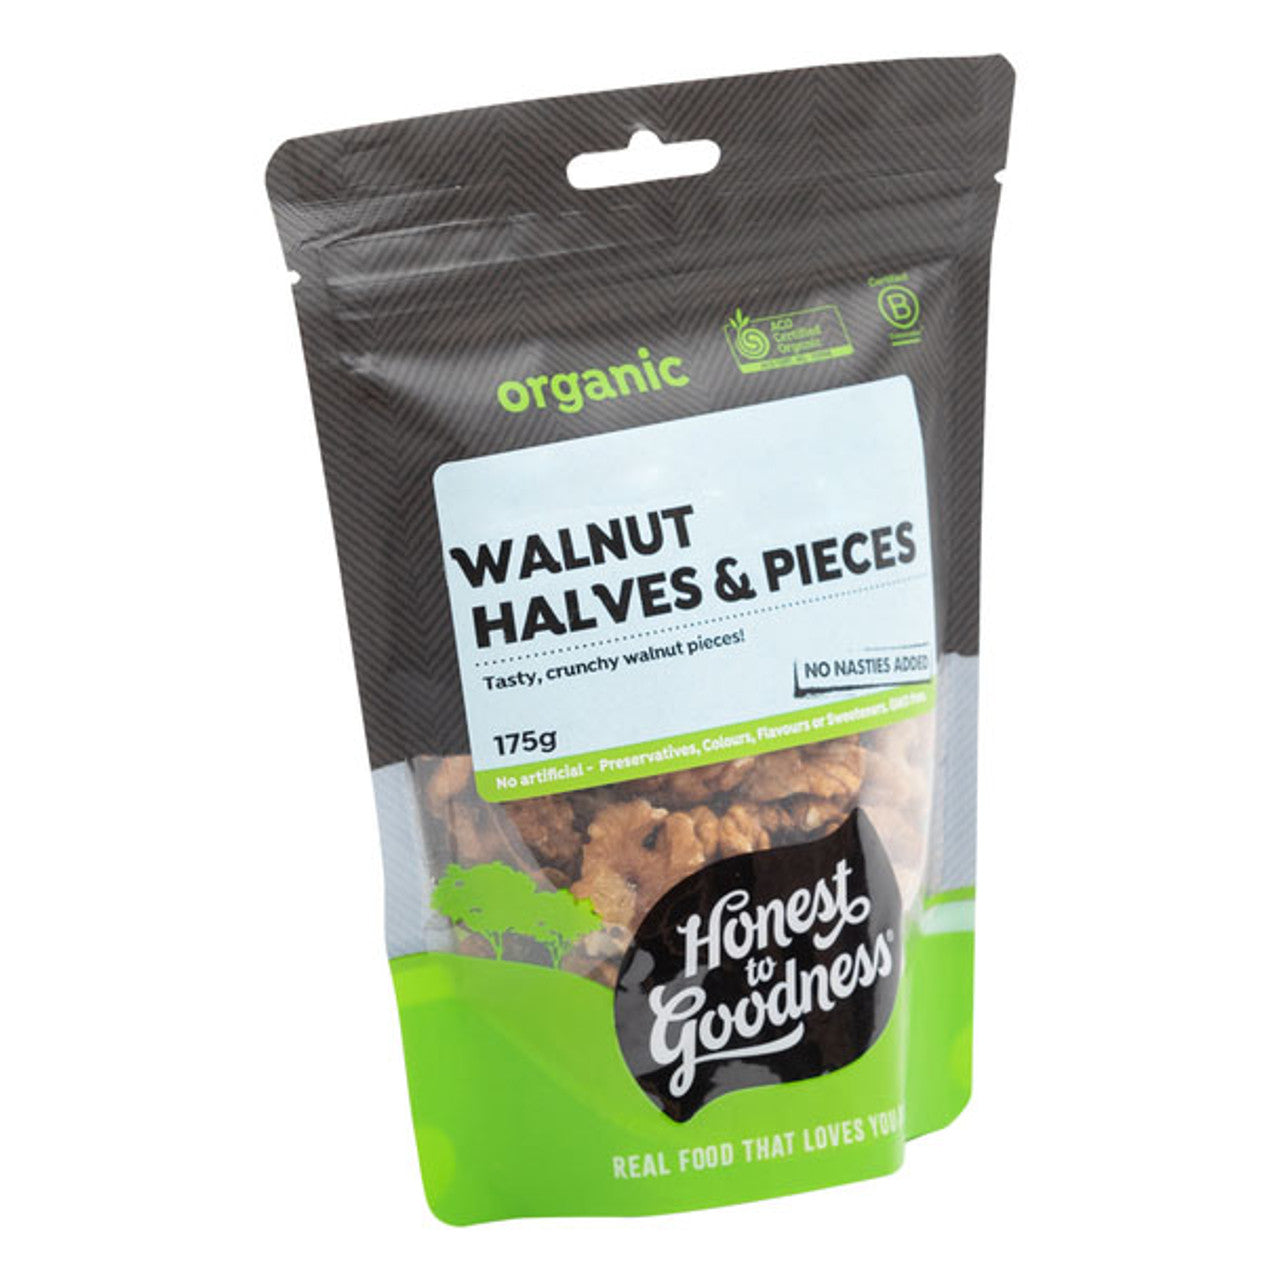 Honest To goodness Organic Walnuts Premium Halves And Pieces 175g